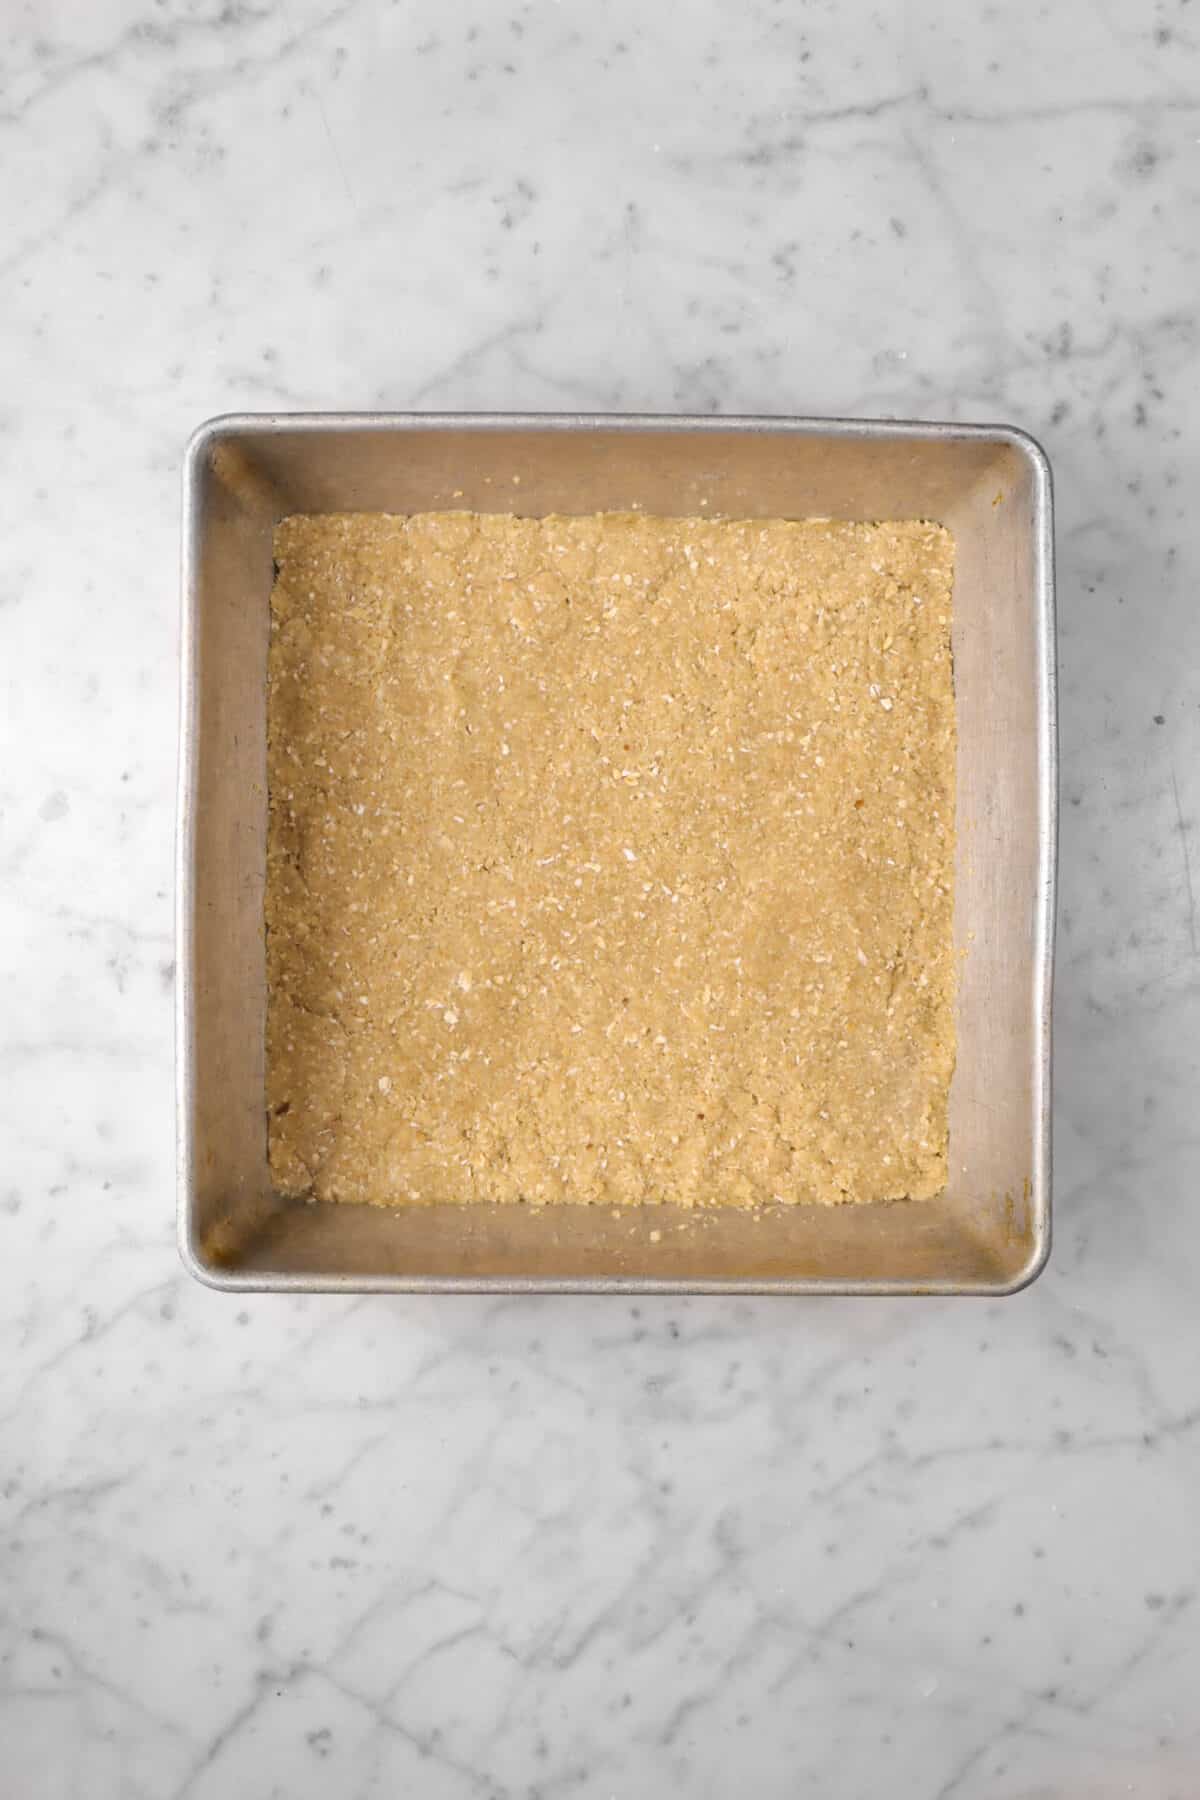 crumble mixture pressed down in square pan